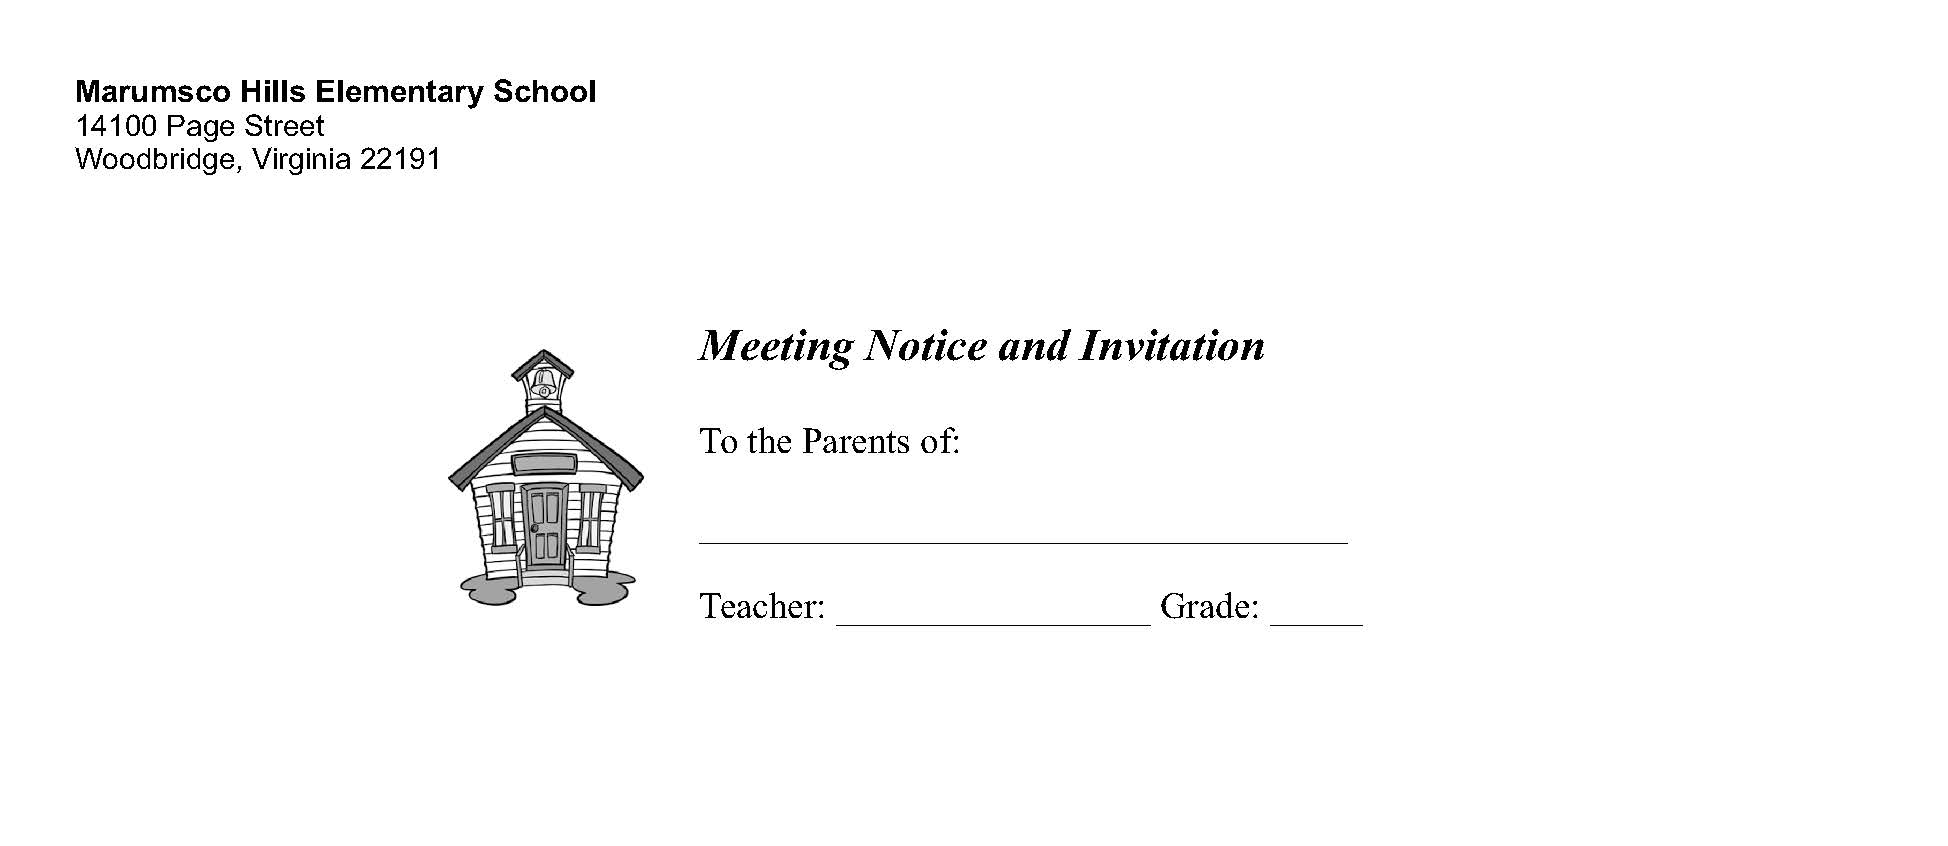 example of meeting notice envelope